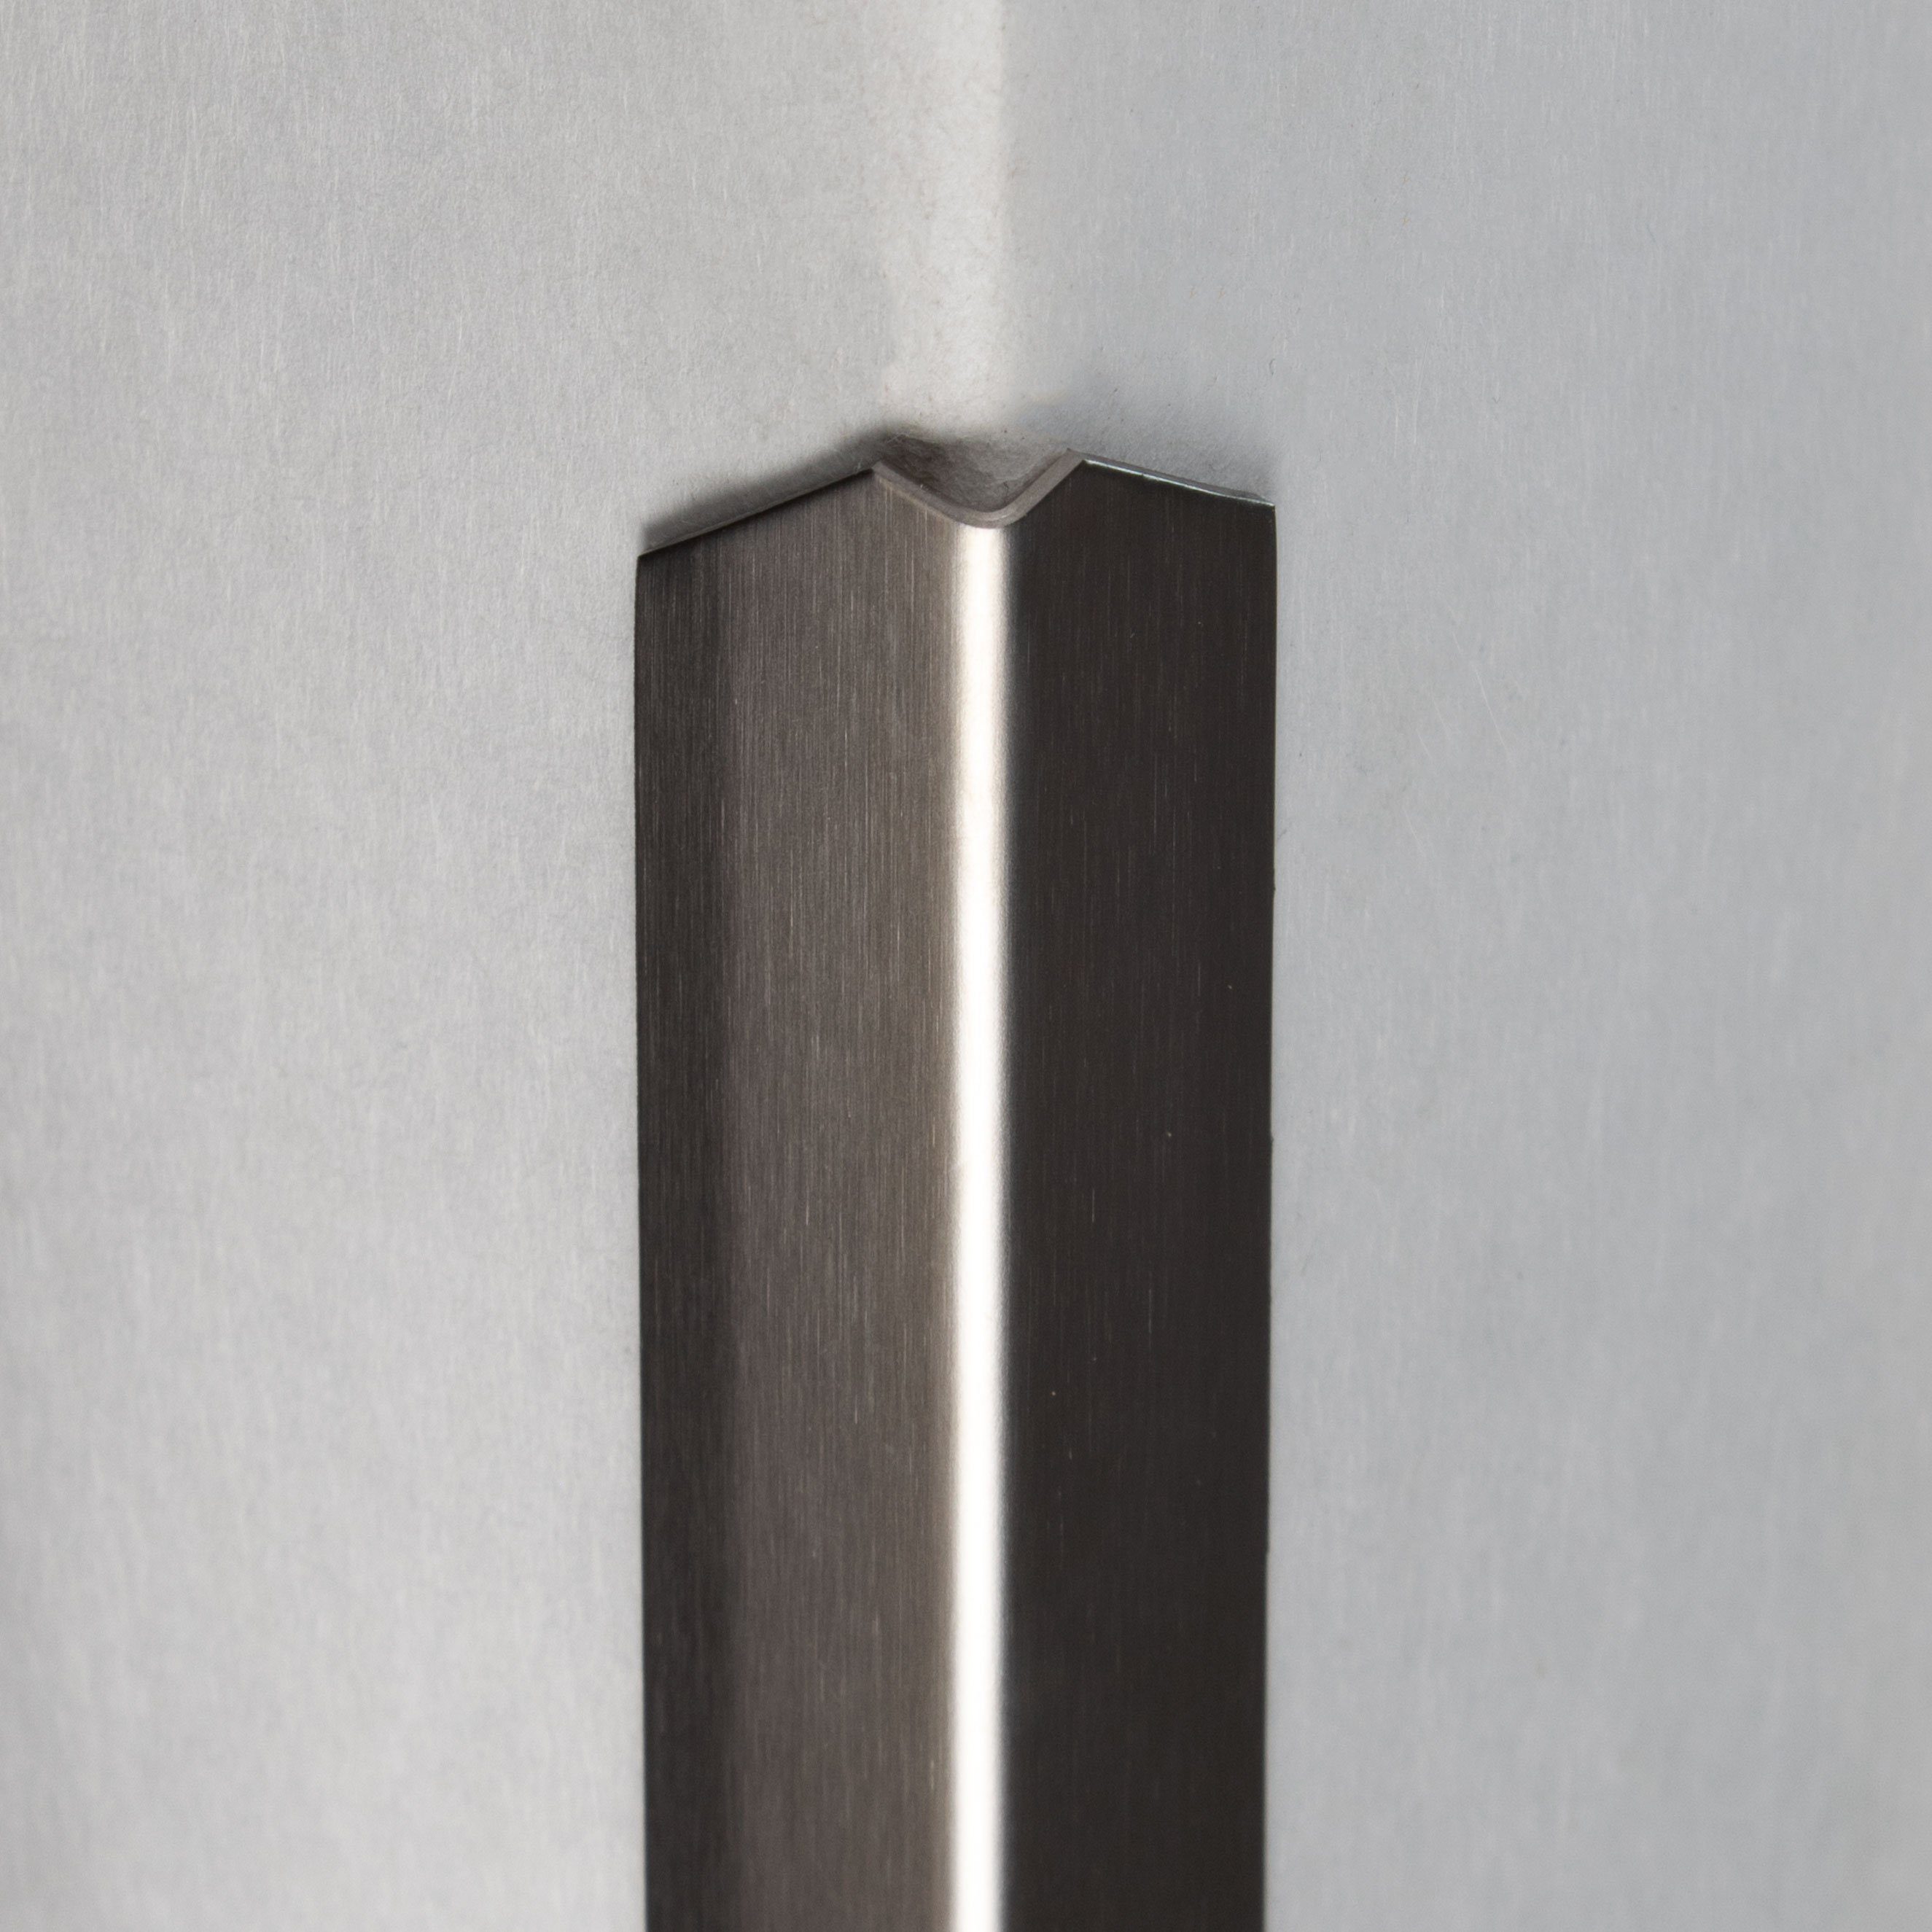 PROVISTON Eckprofil Aluminium, 20 x 20 x 1000 mm, Edelstahl matt, Bau- & Montageprofile